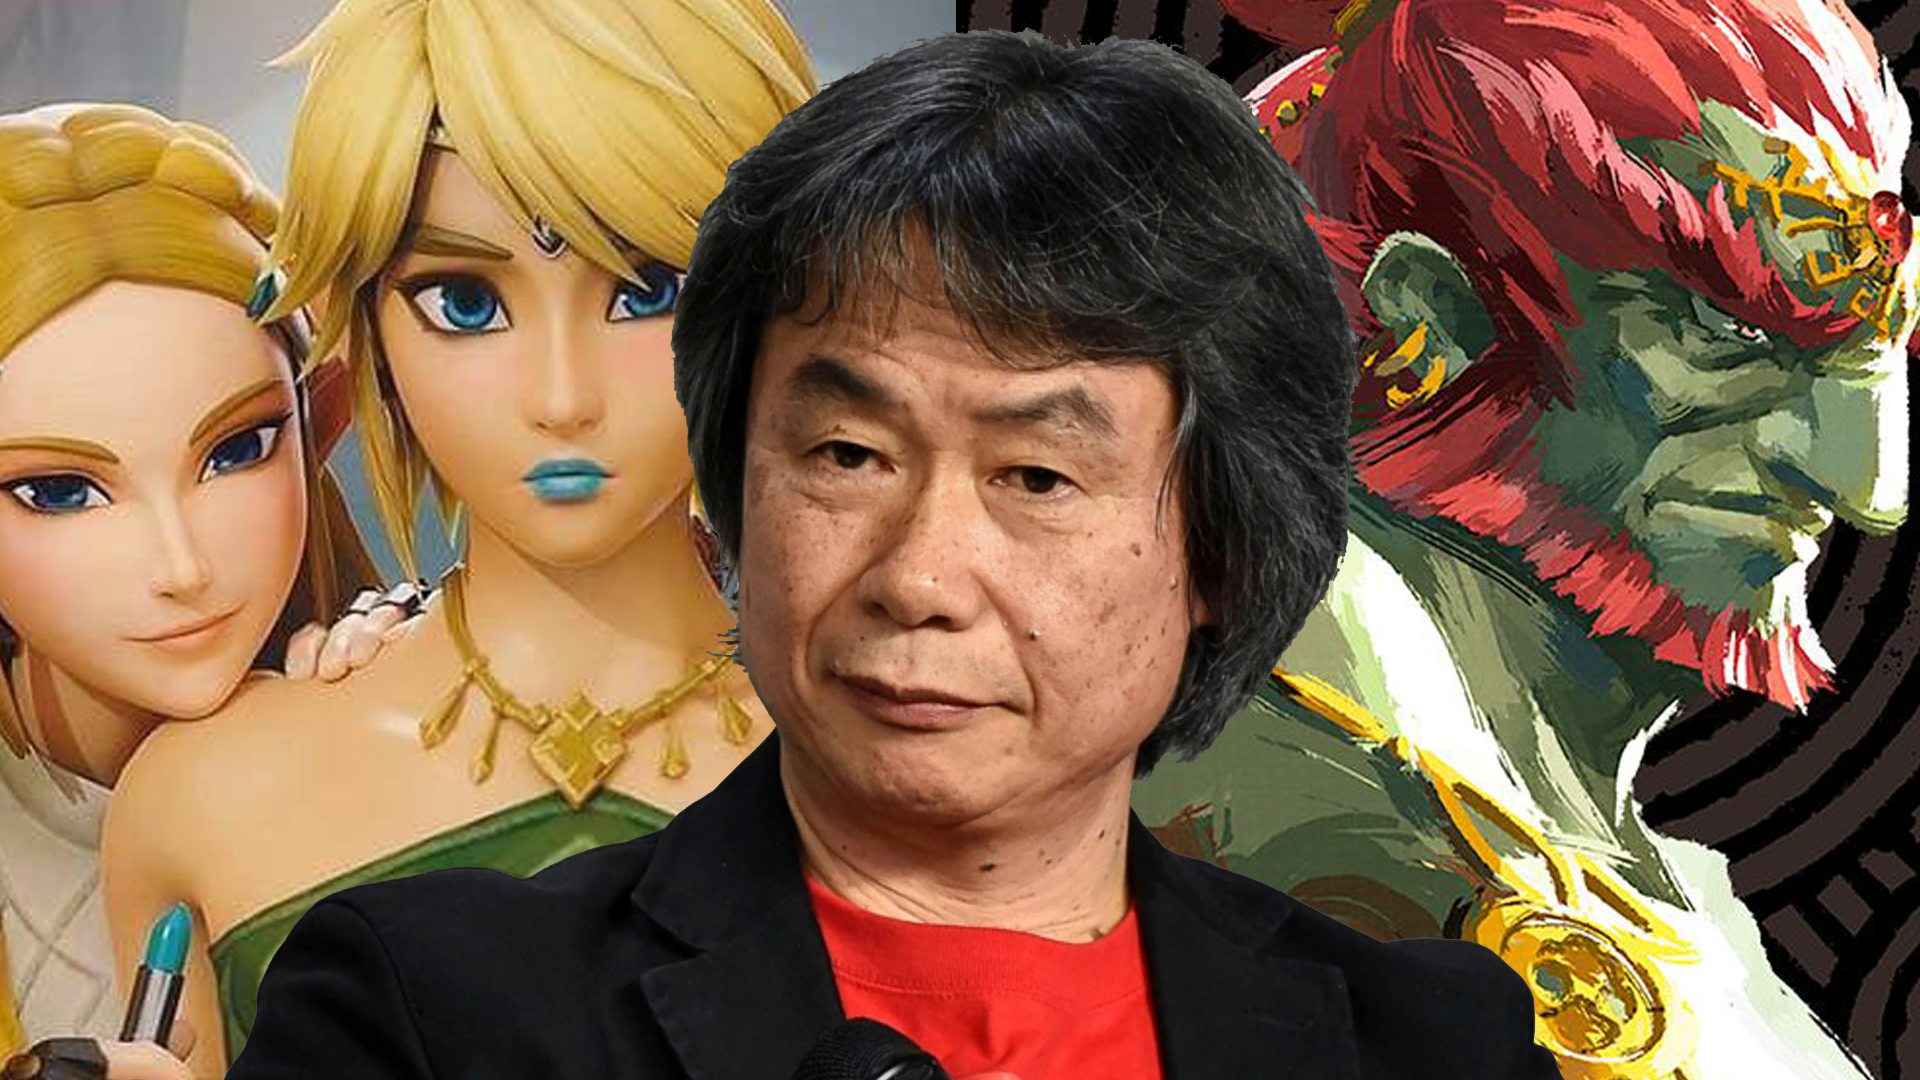 "Link Loves Zelda, Not Ganondorf" Confused Miyamoto Confirms